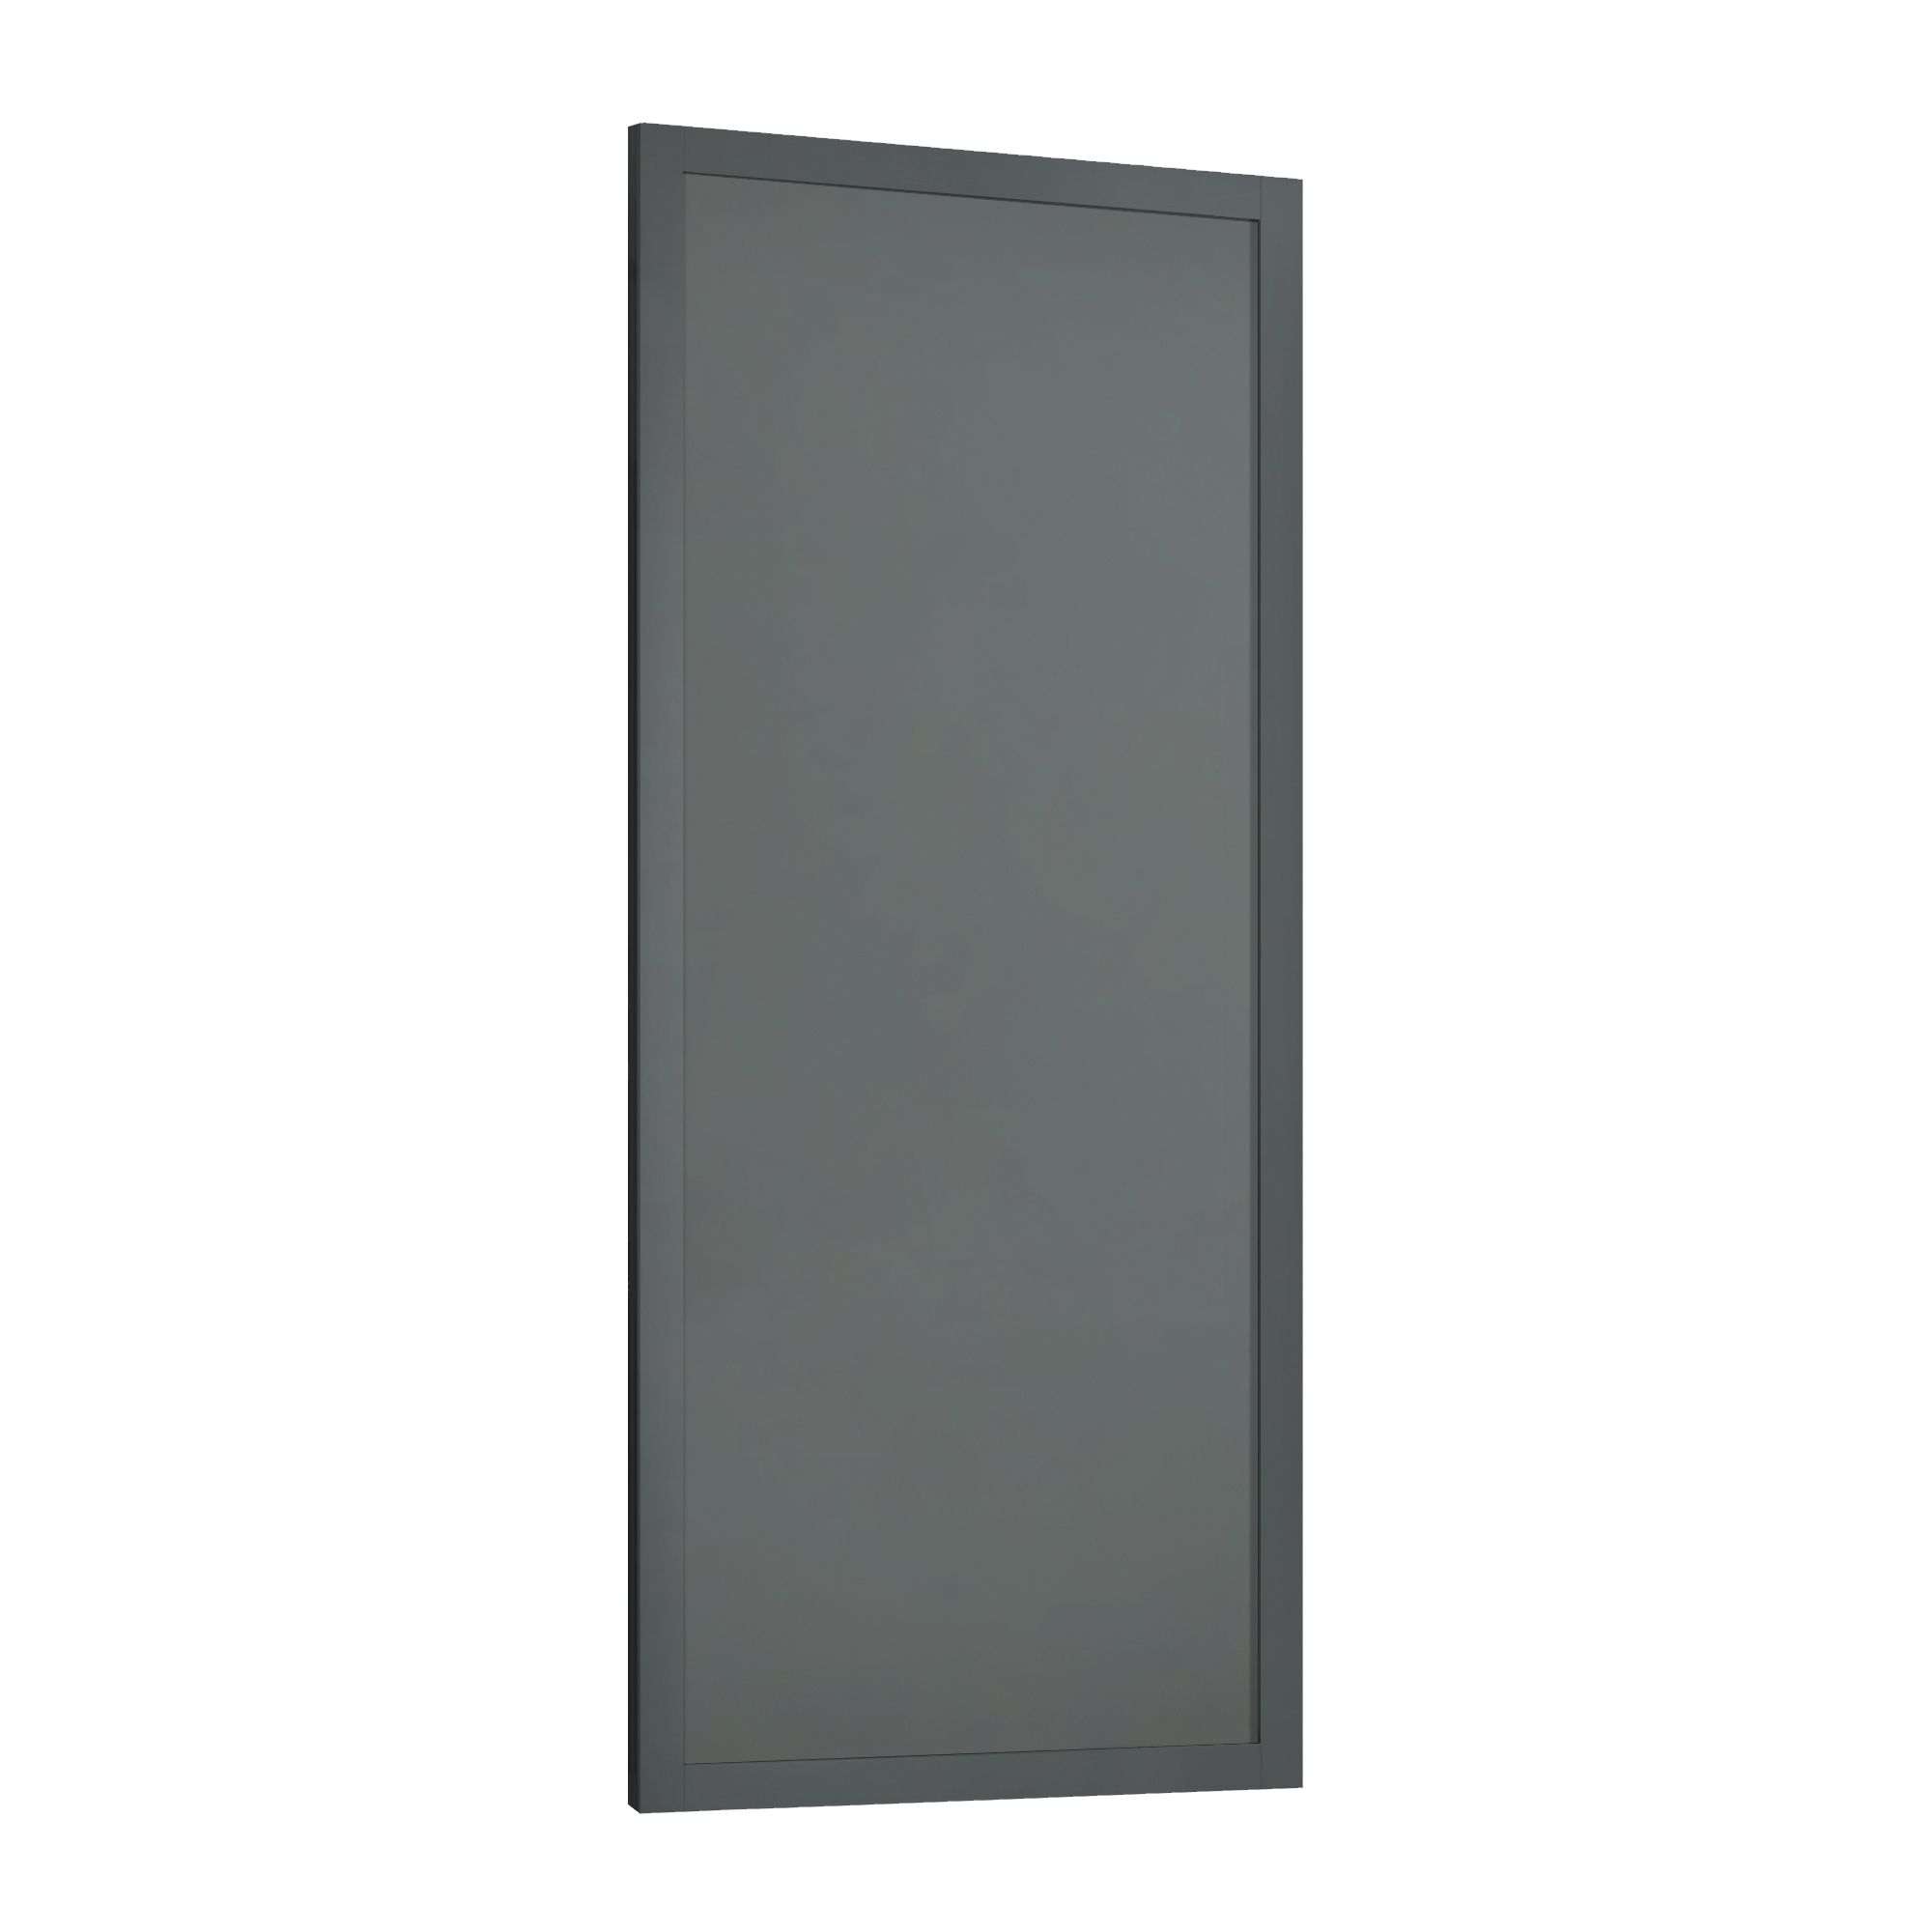 Spacepro Shaker Matt Dark Grey Single panel Sliding wardrobe door (H) 2220mm x (W) 610mm